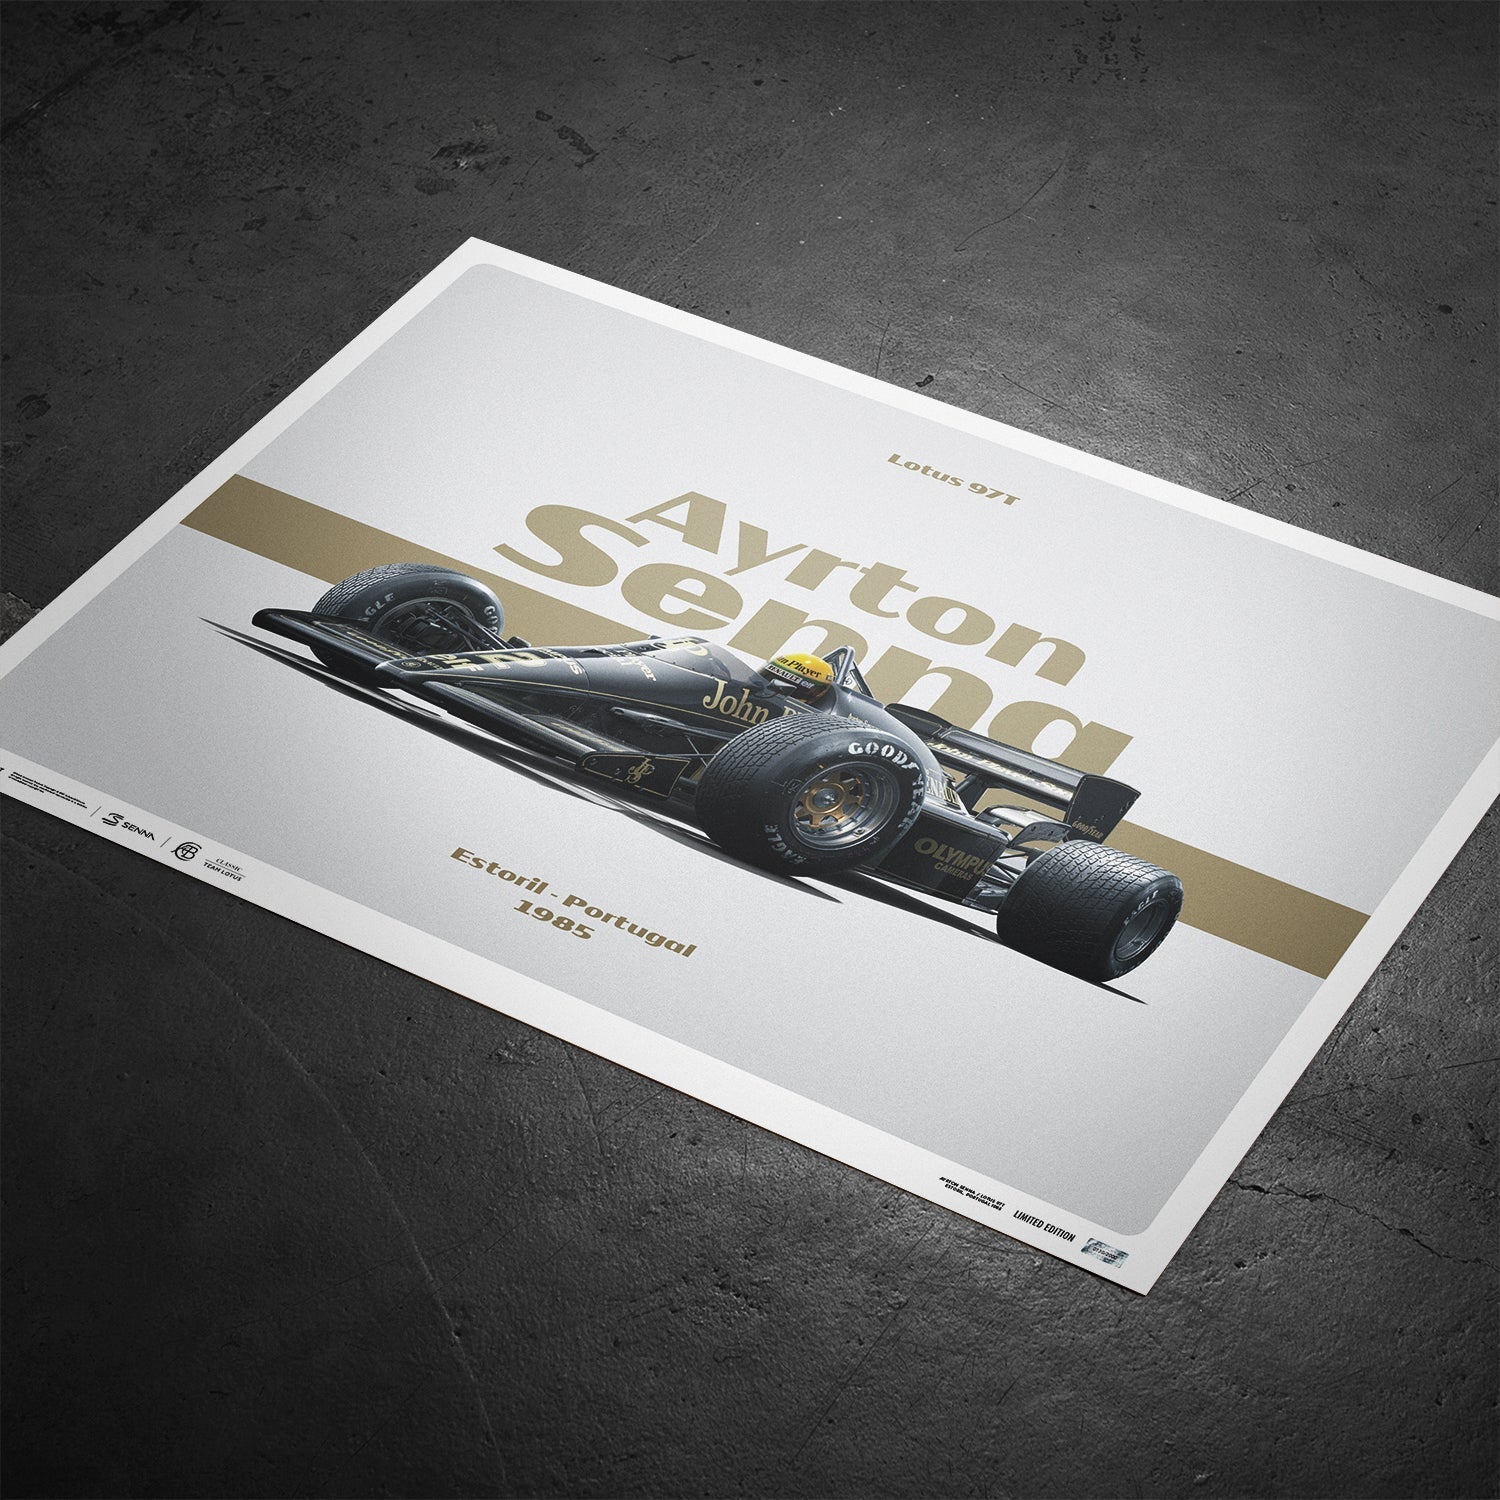 Automobilist | Lotus 97T Ayrton Senna Estoril 1985 Horizontal Tribute Limited Poster-Poster-Automobilist-gpx-store